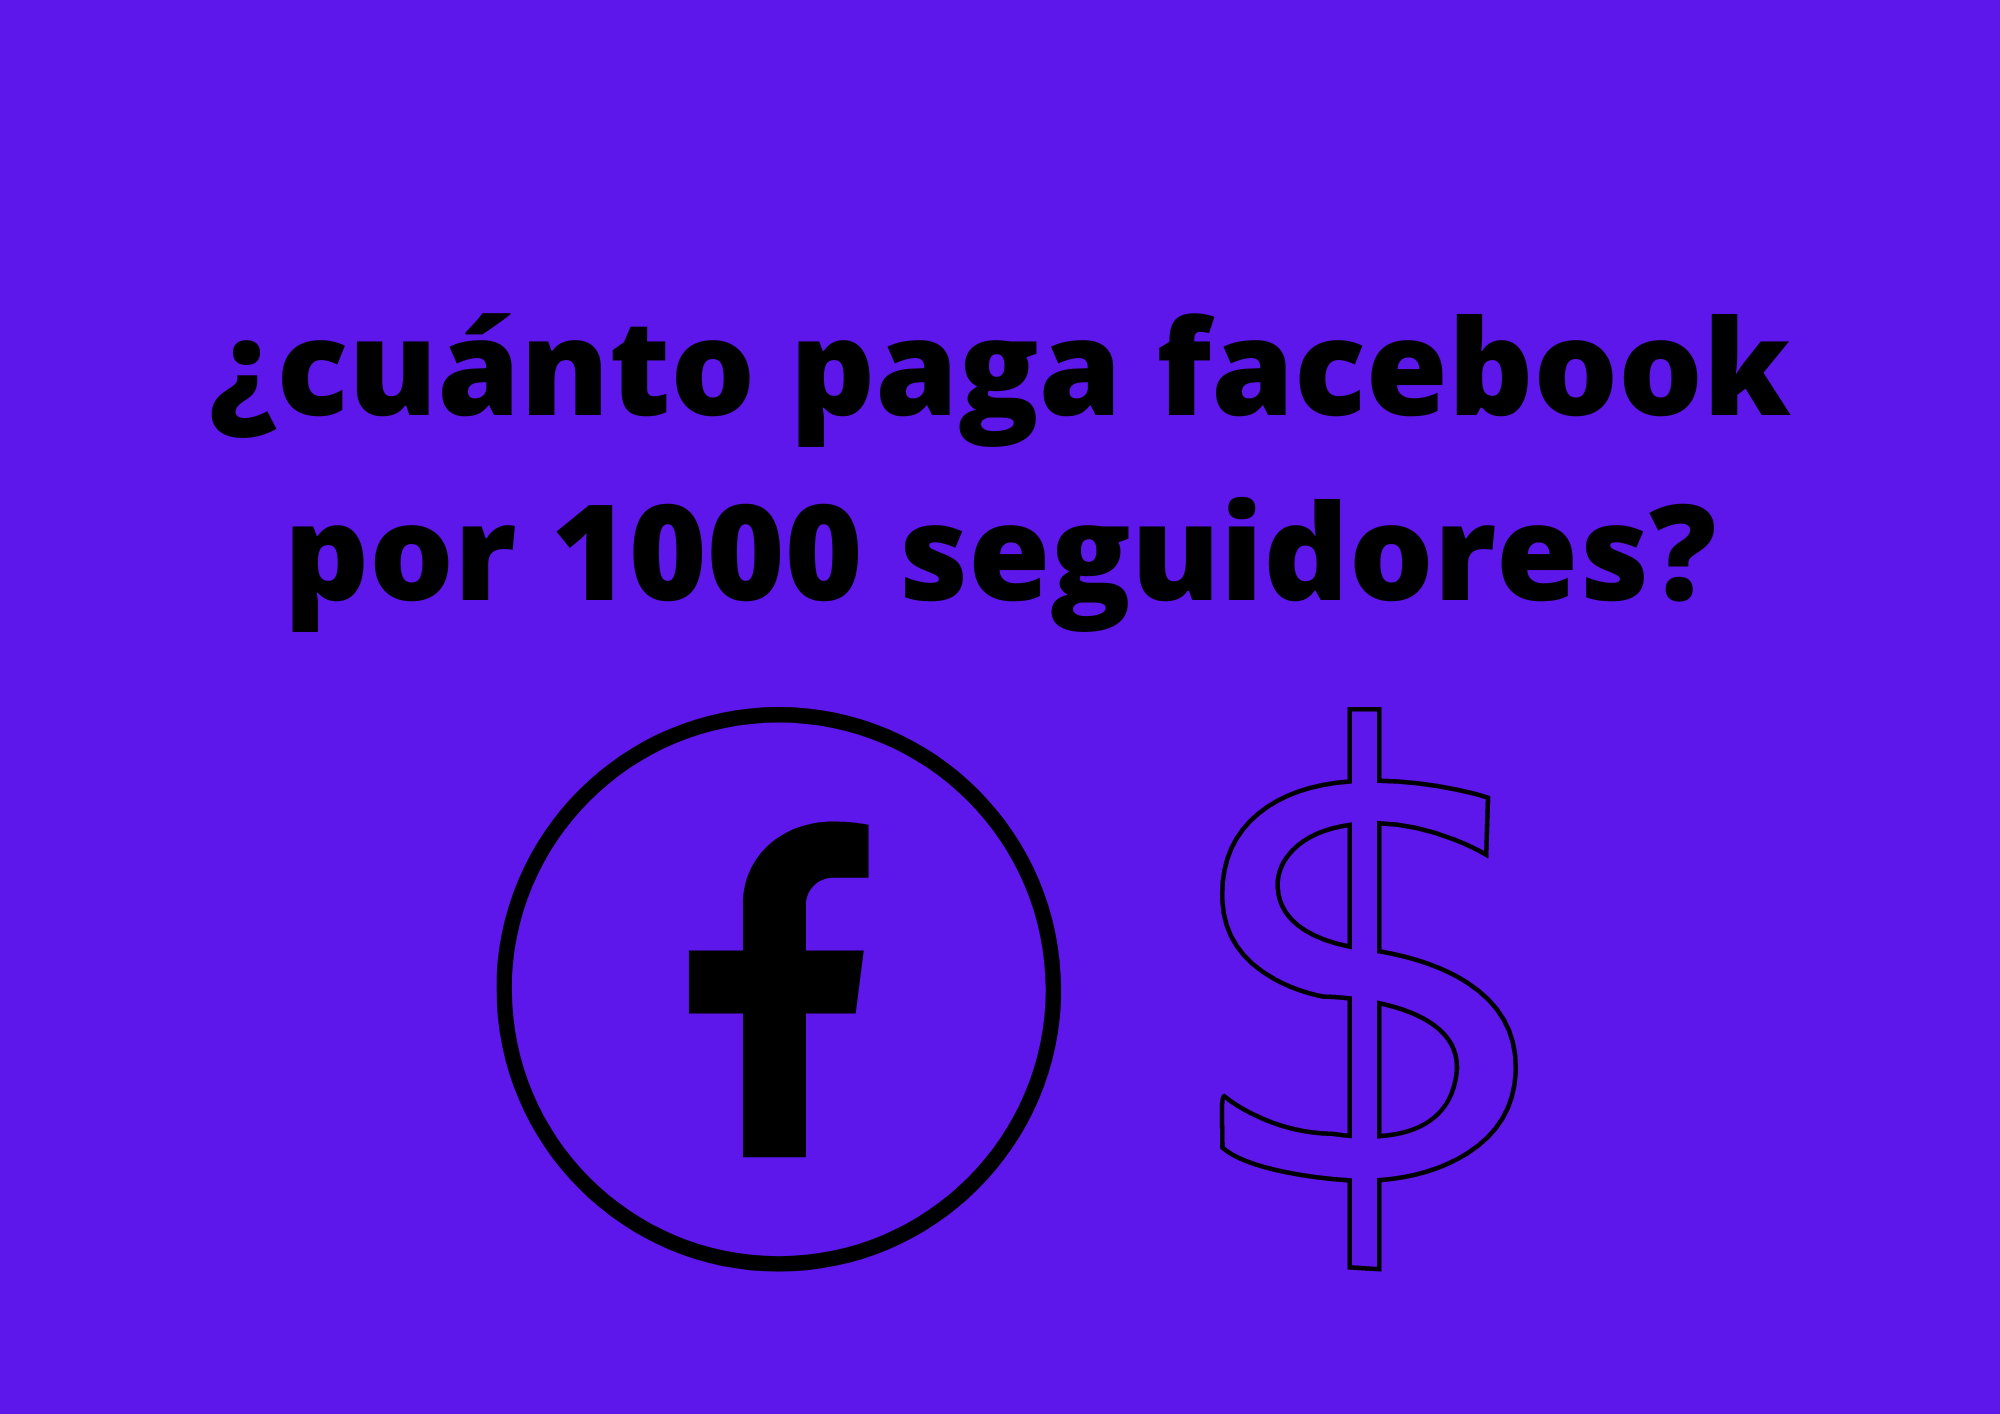 ¿Cuanto paga facebook por 1000 seguidores?